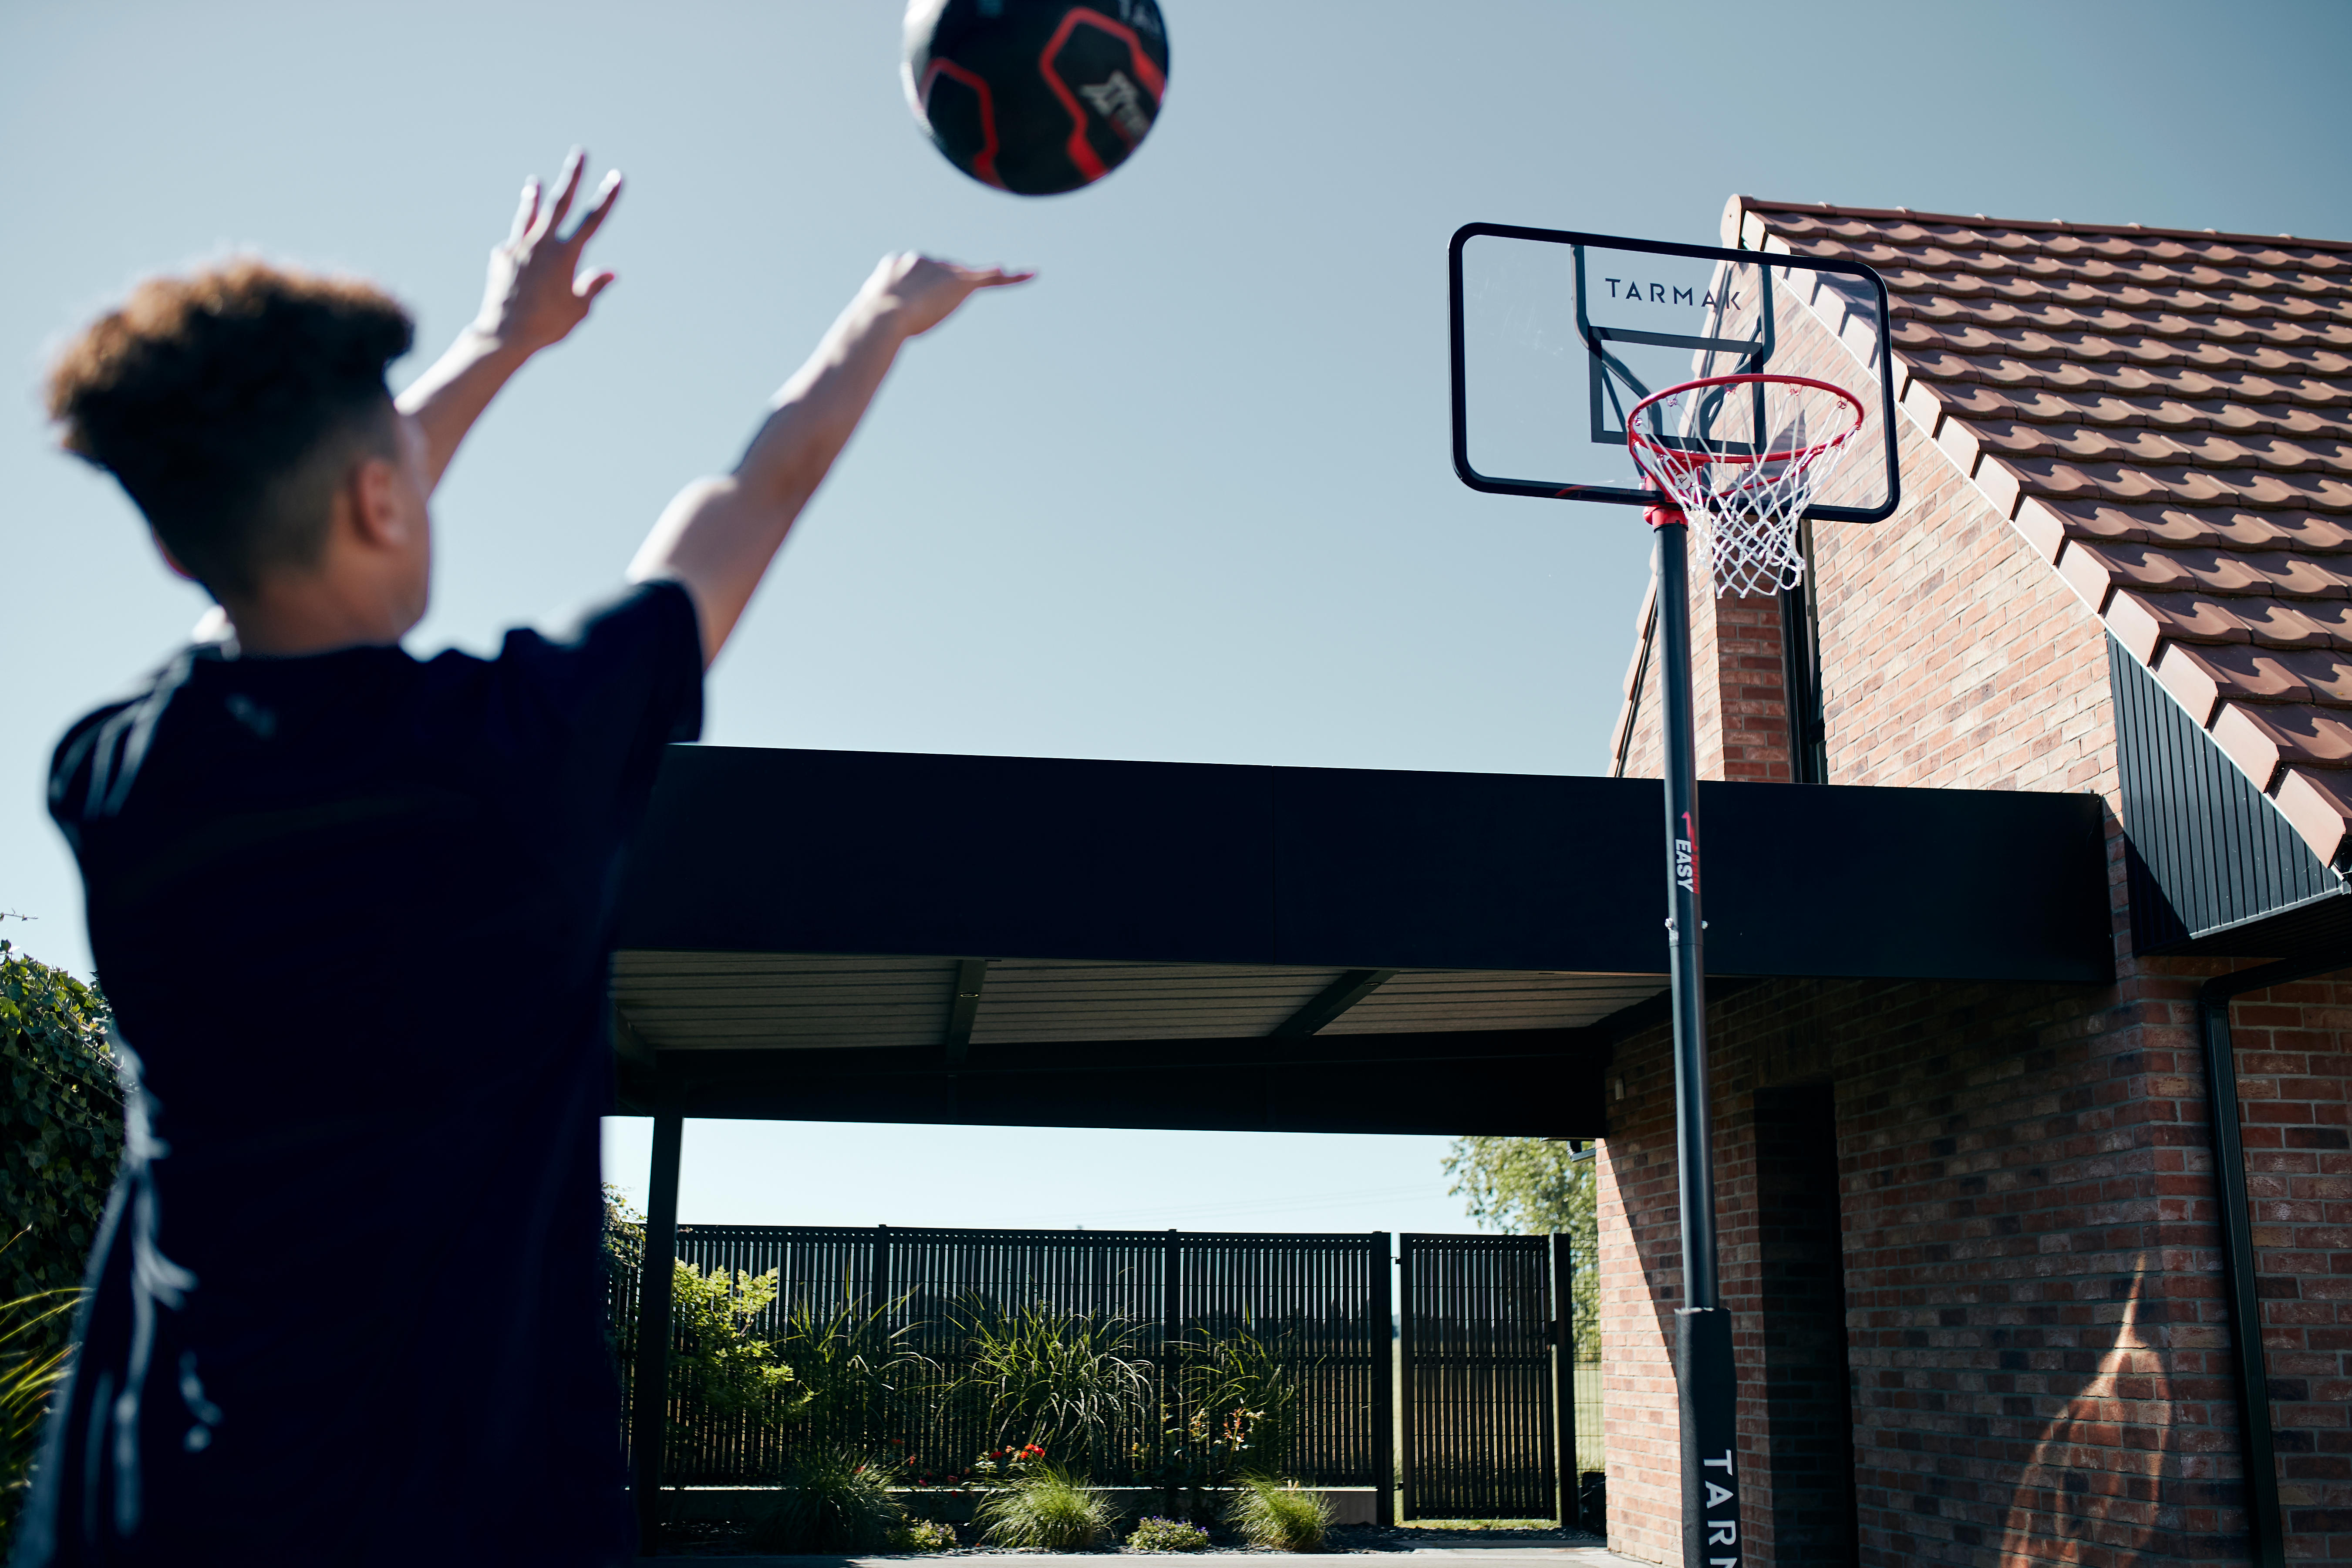 Basketball Hoop with Adjustable Fold Stand - B 100 Easy PC Black - TARMAK